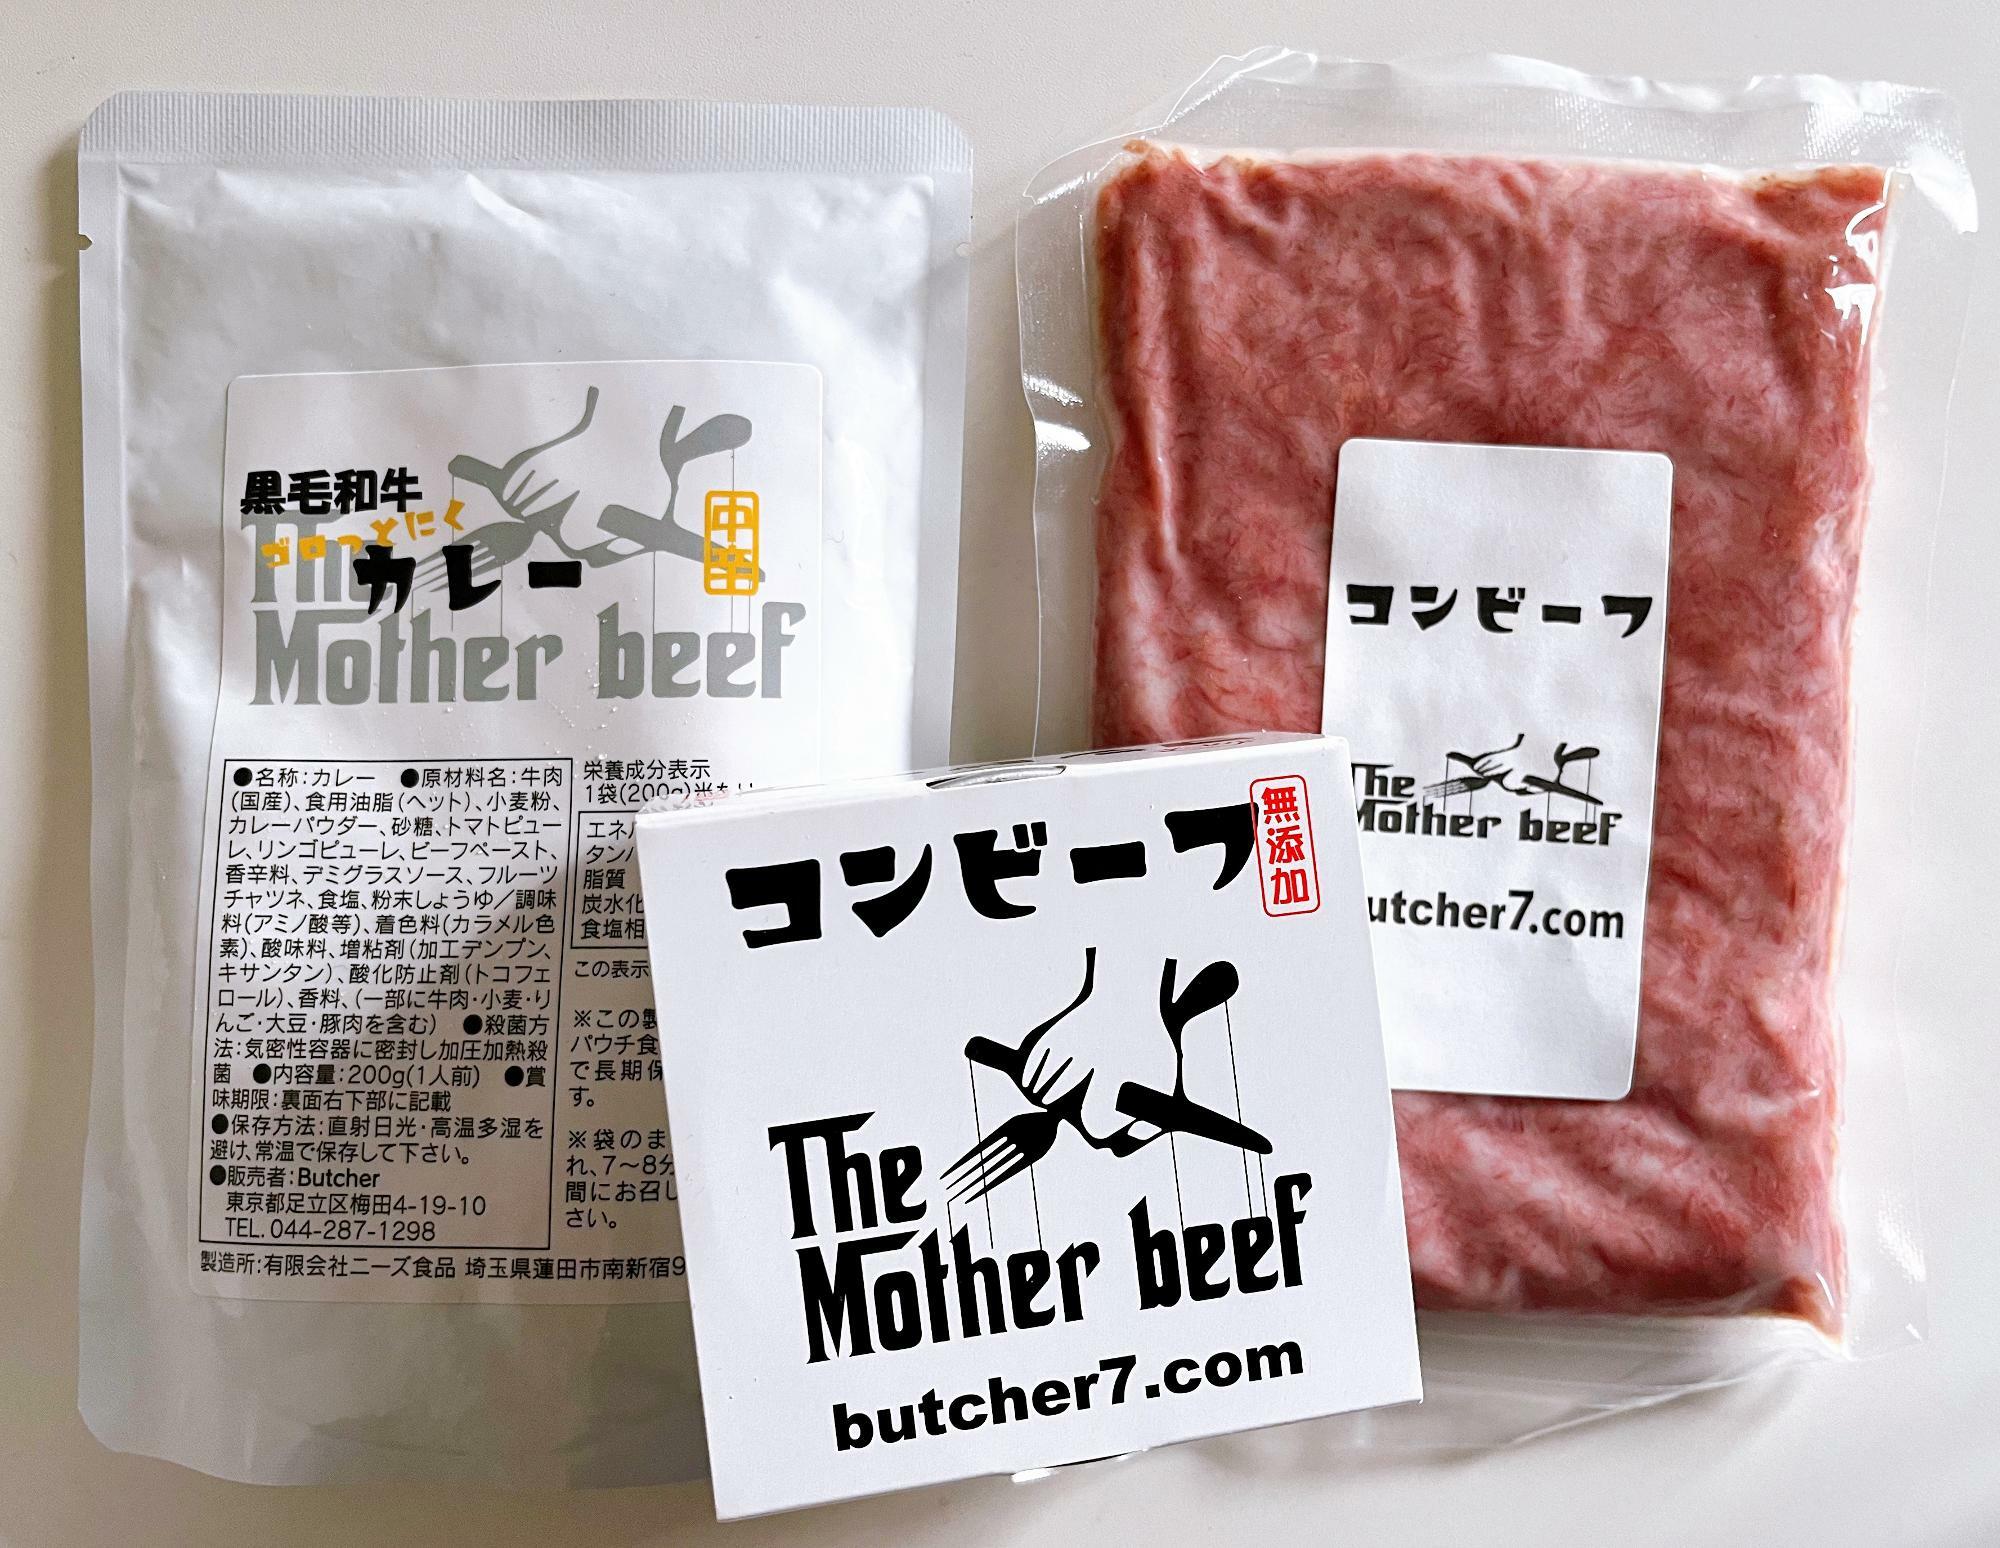 Butcherオリジナル商品